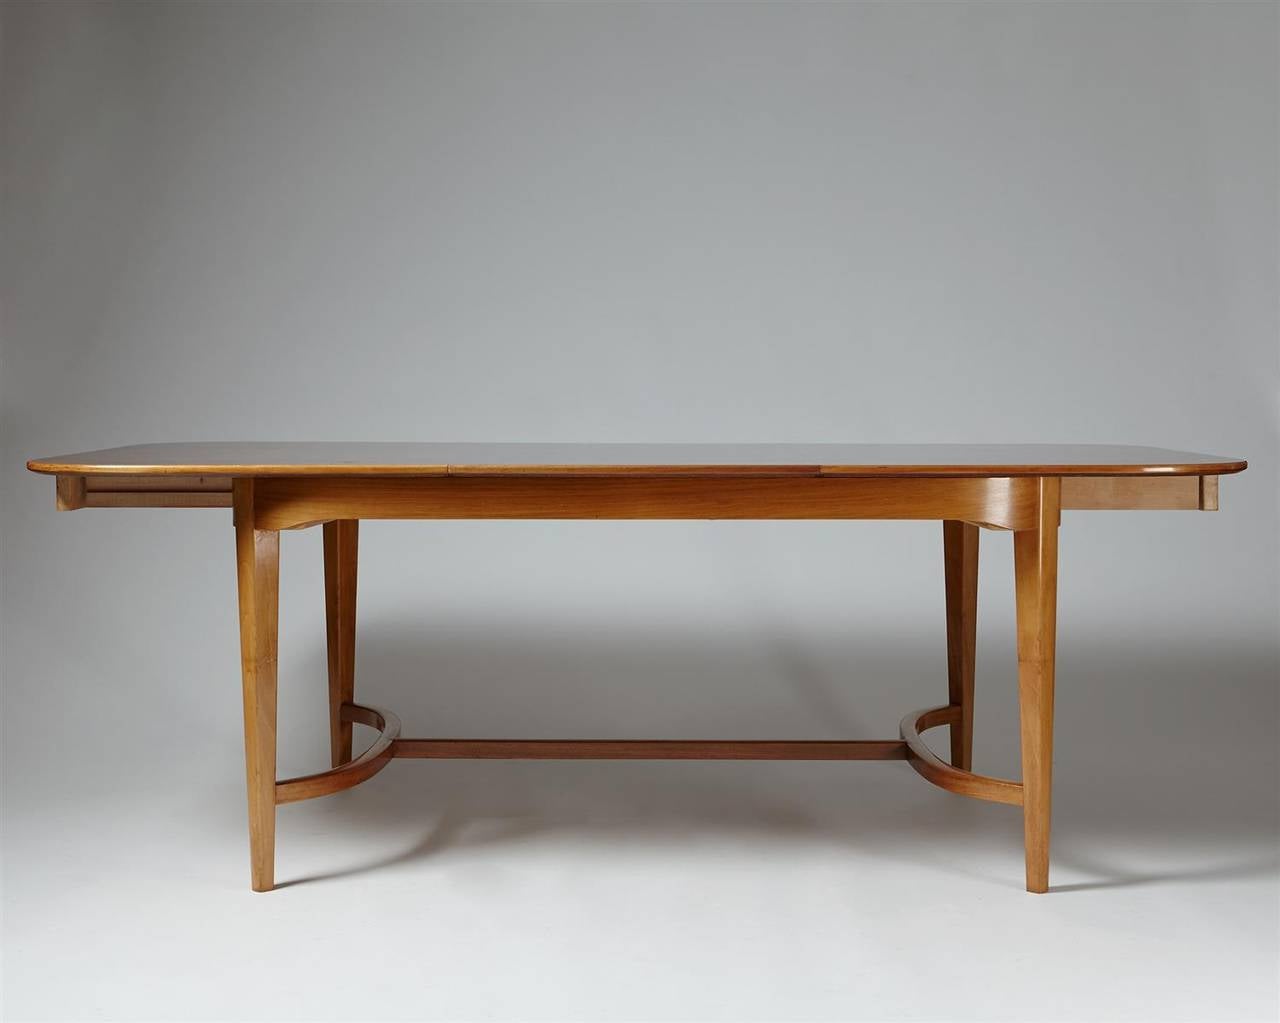 Mid-20th Century Dining Table Designed by Josef Frank for Svenskt Tenn, Sweden 1950s